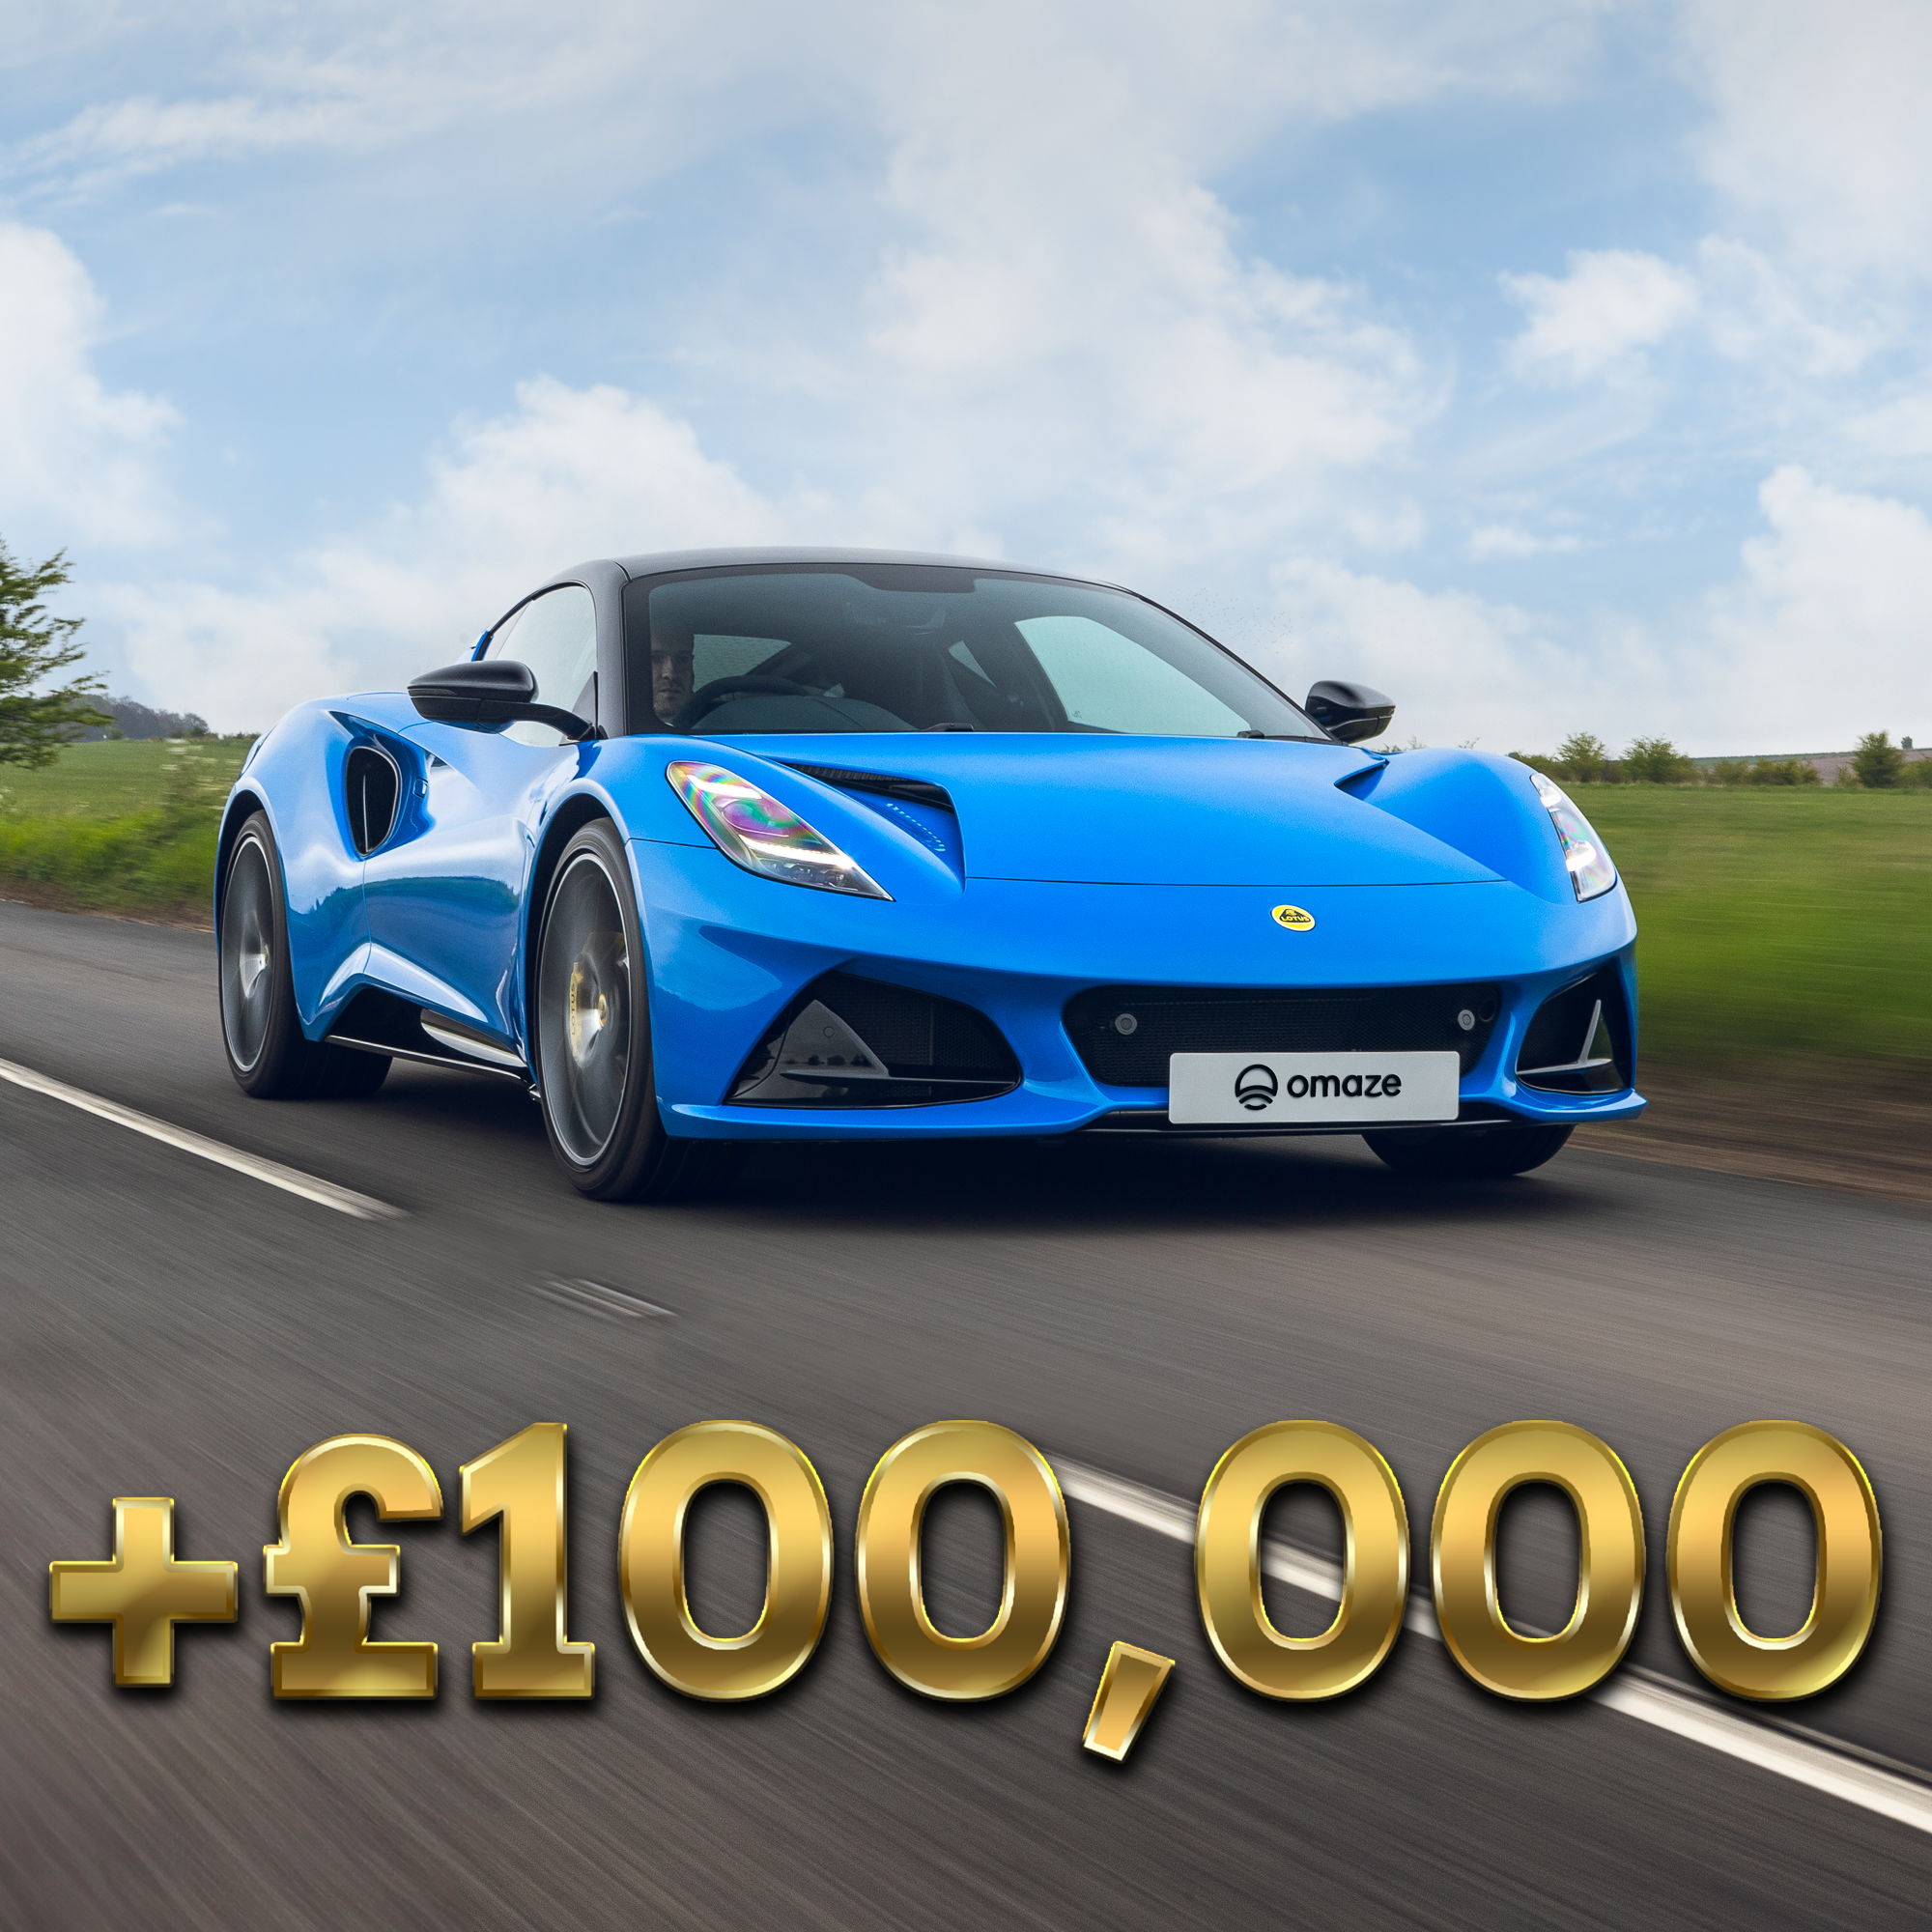 Lotus Emira V6 + £100k | SurreyEarly Bird Prize - Enter by Sunday 16th June